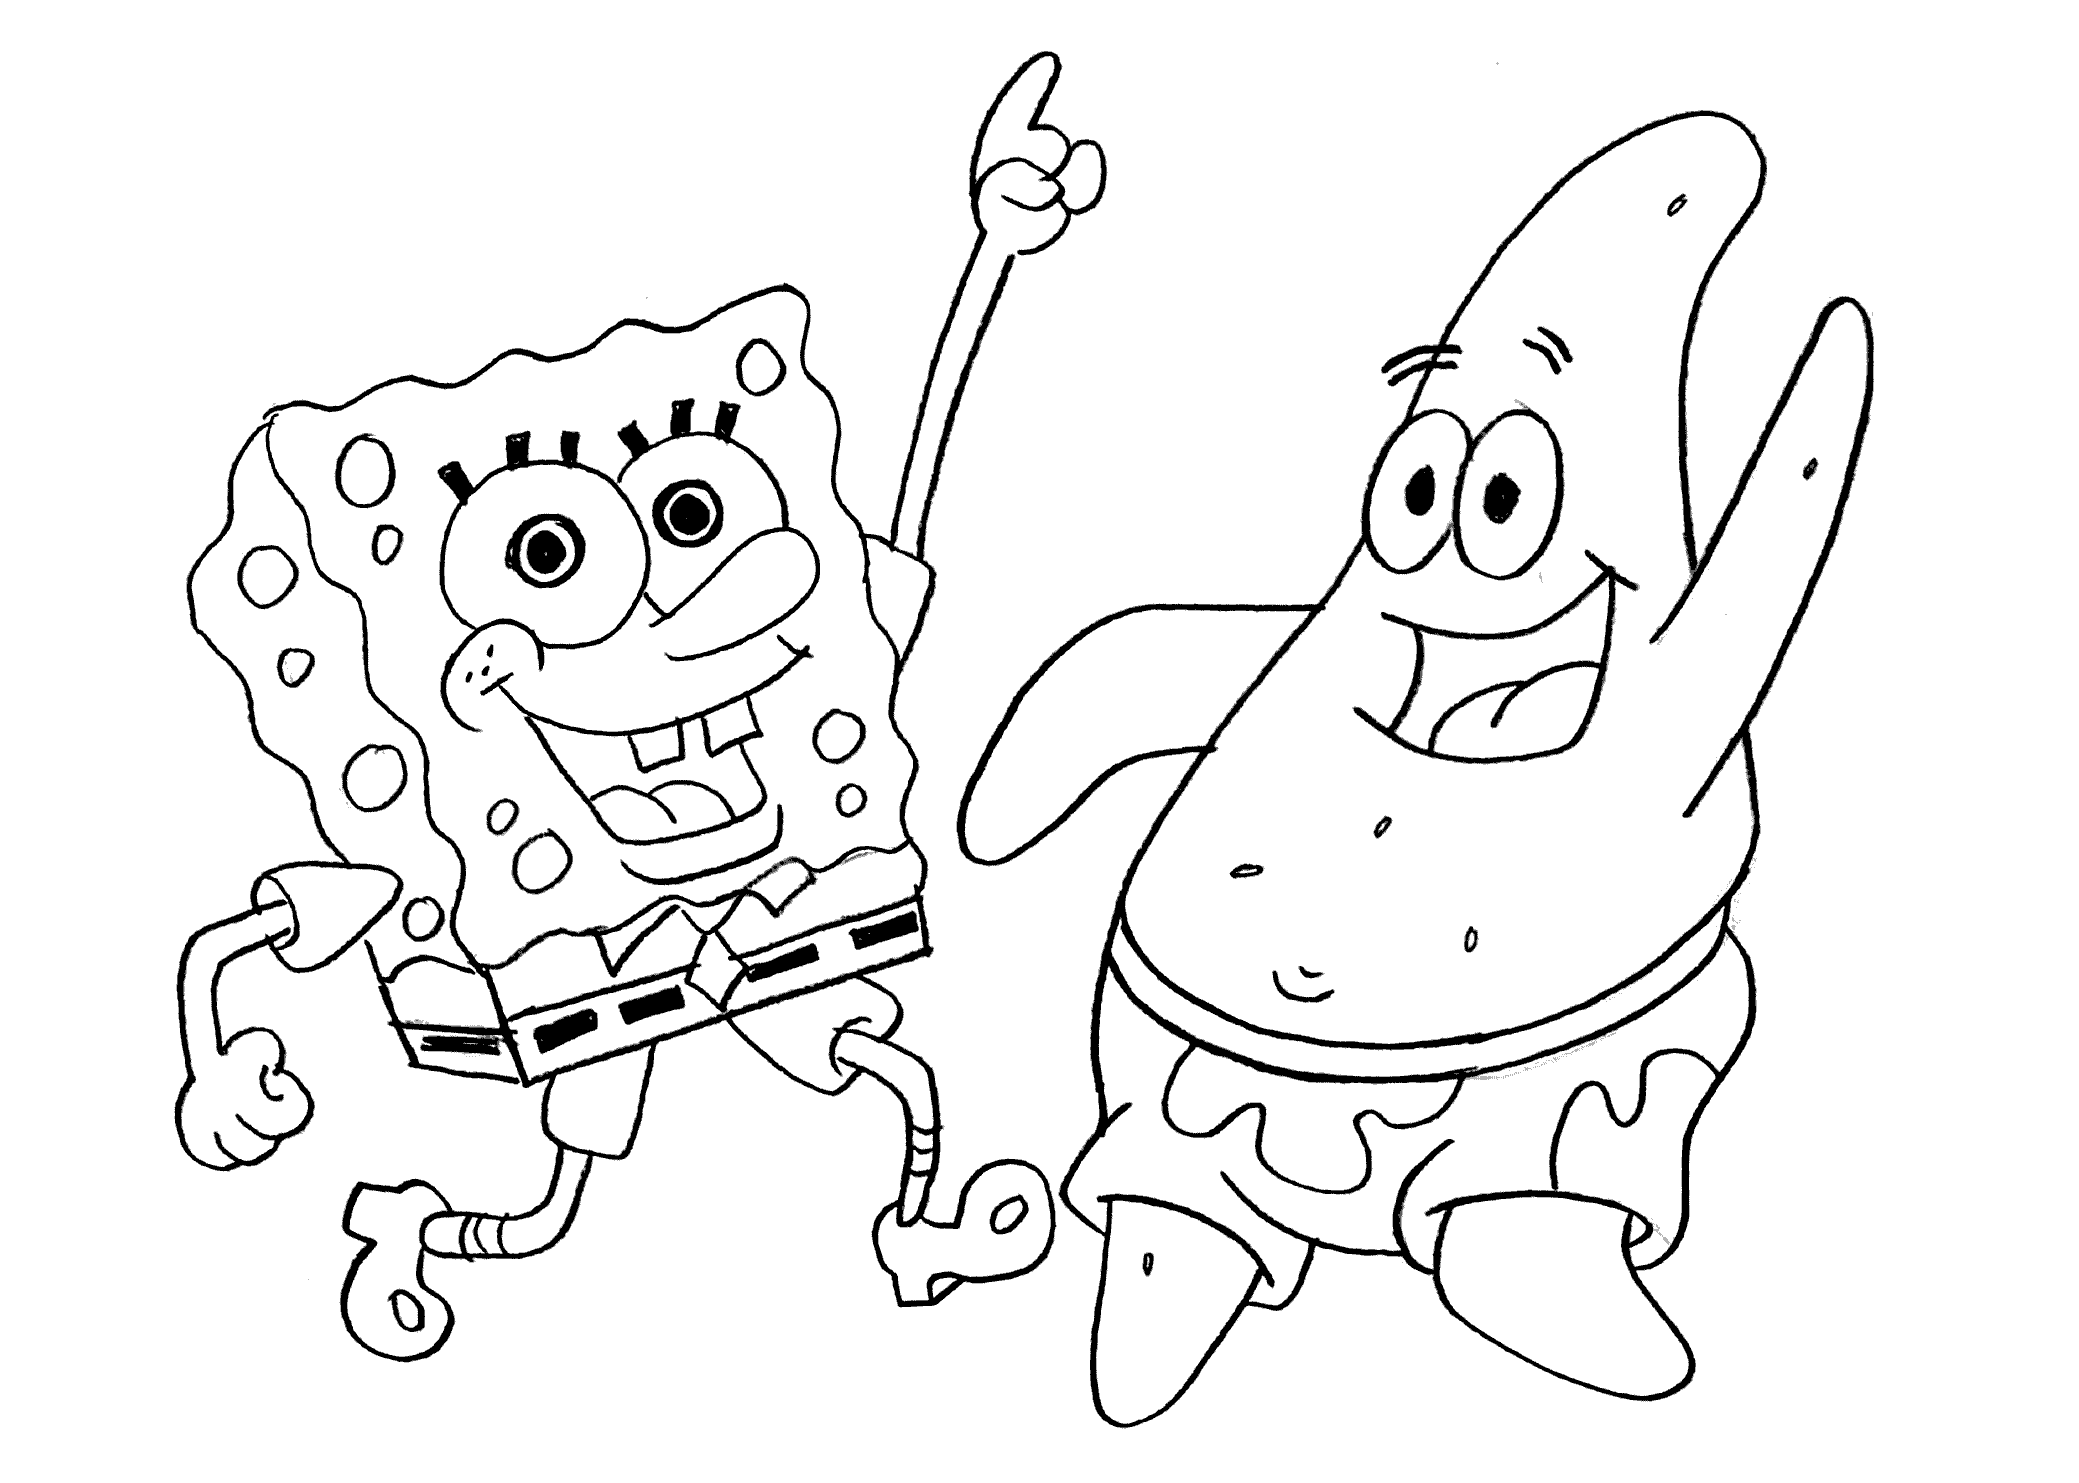 Spongebob And Patrick Dancing Coloring Page